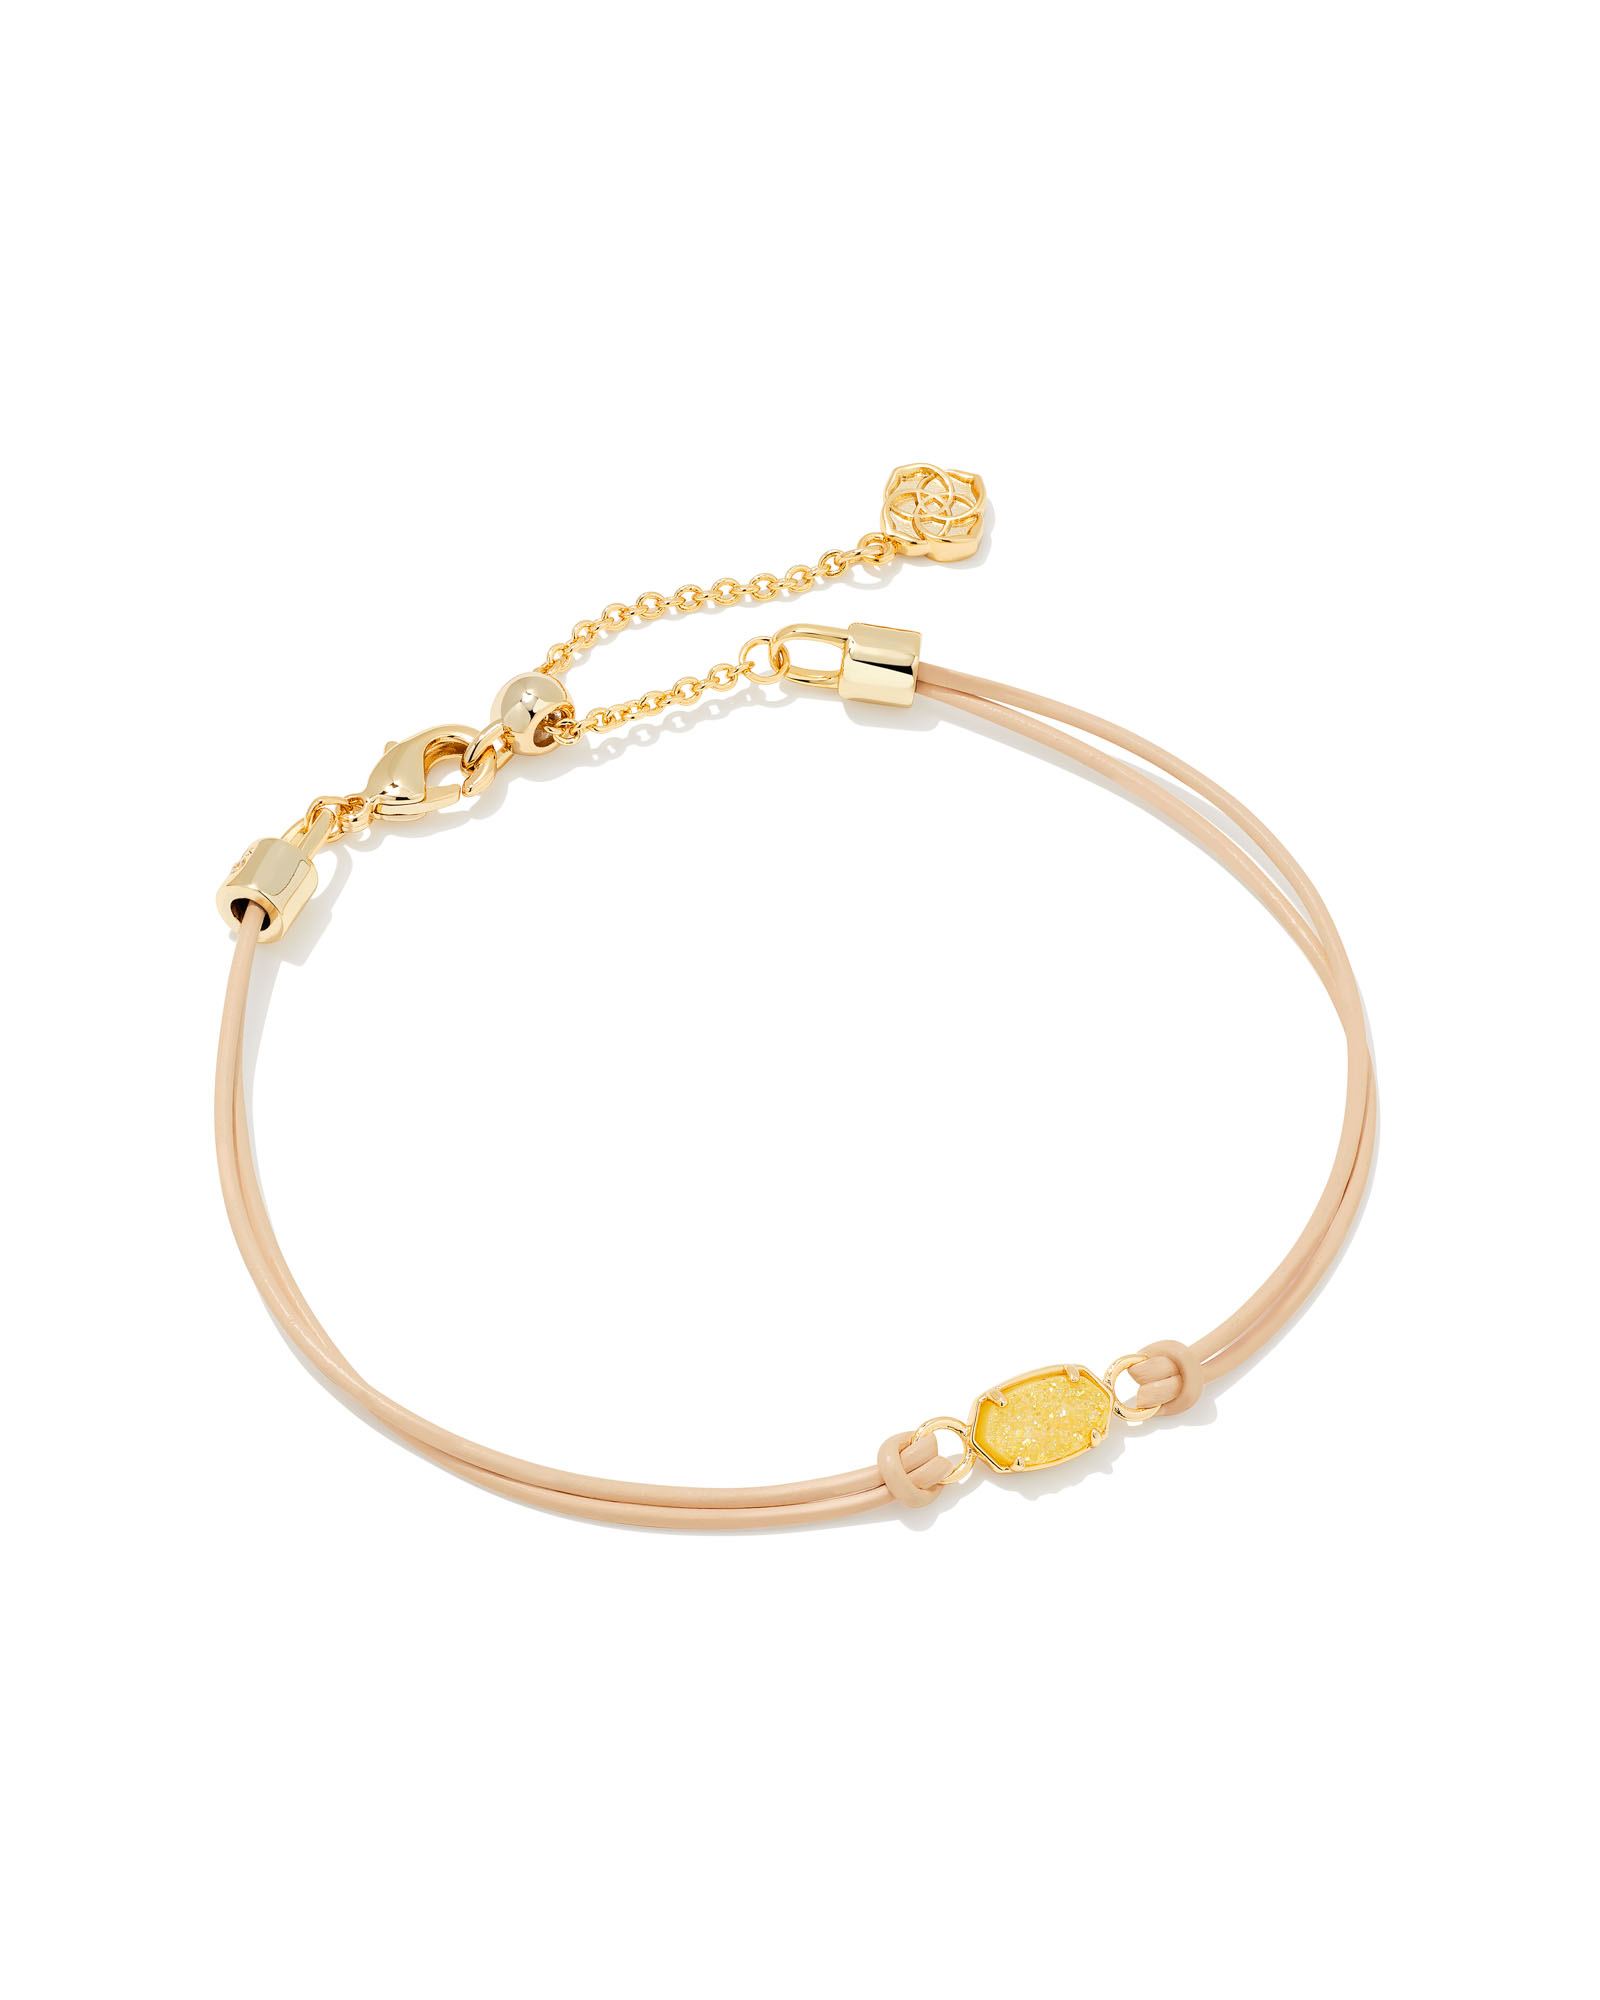 Emilie Gold Corded Bracelet in Light Yellow Drusy | Kendra Scott